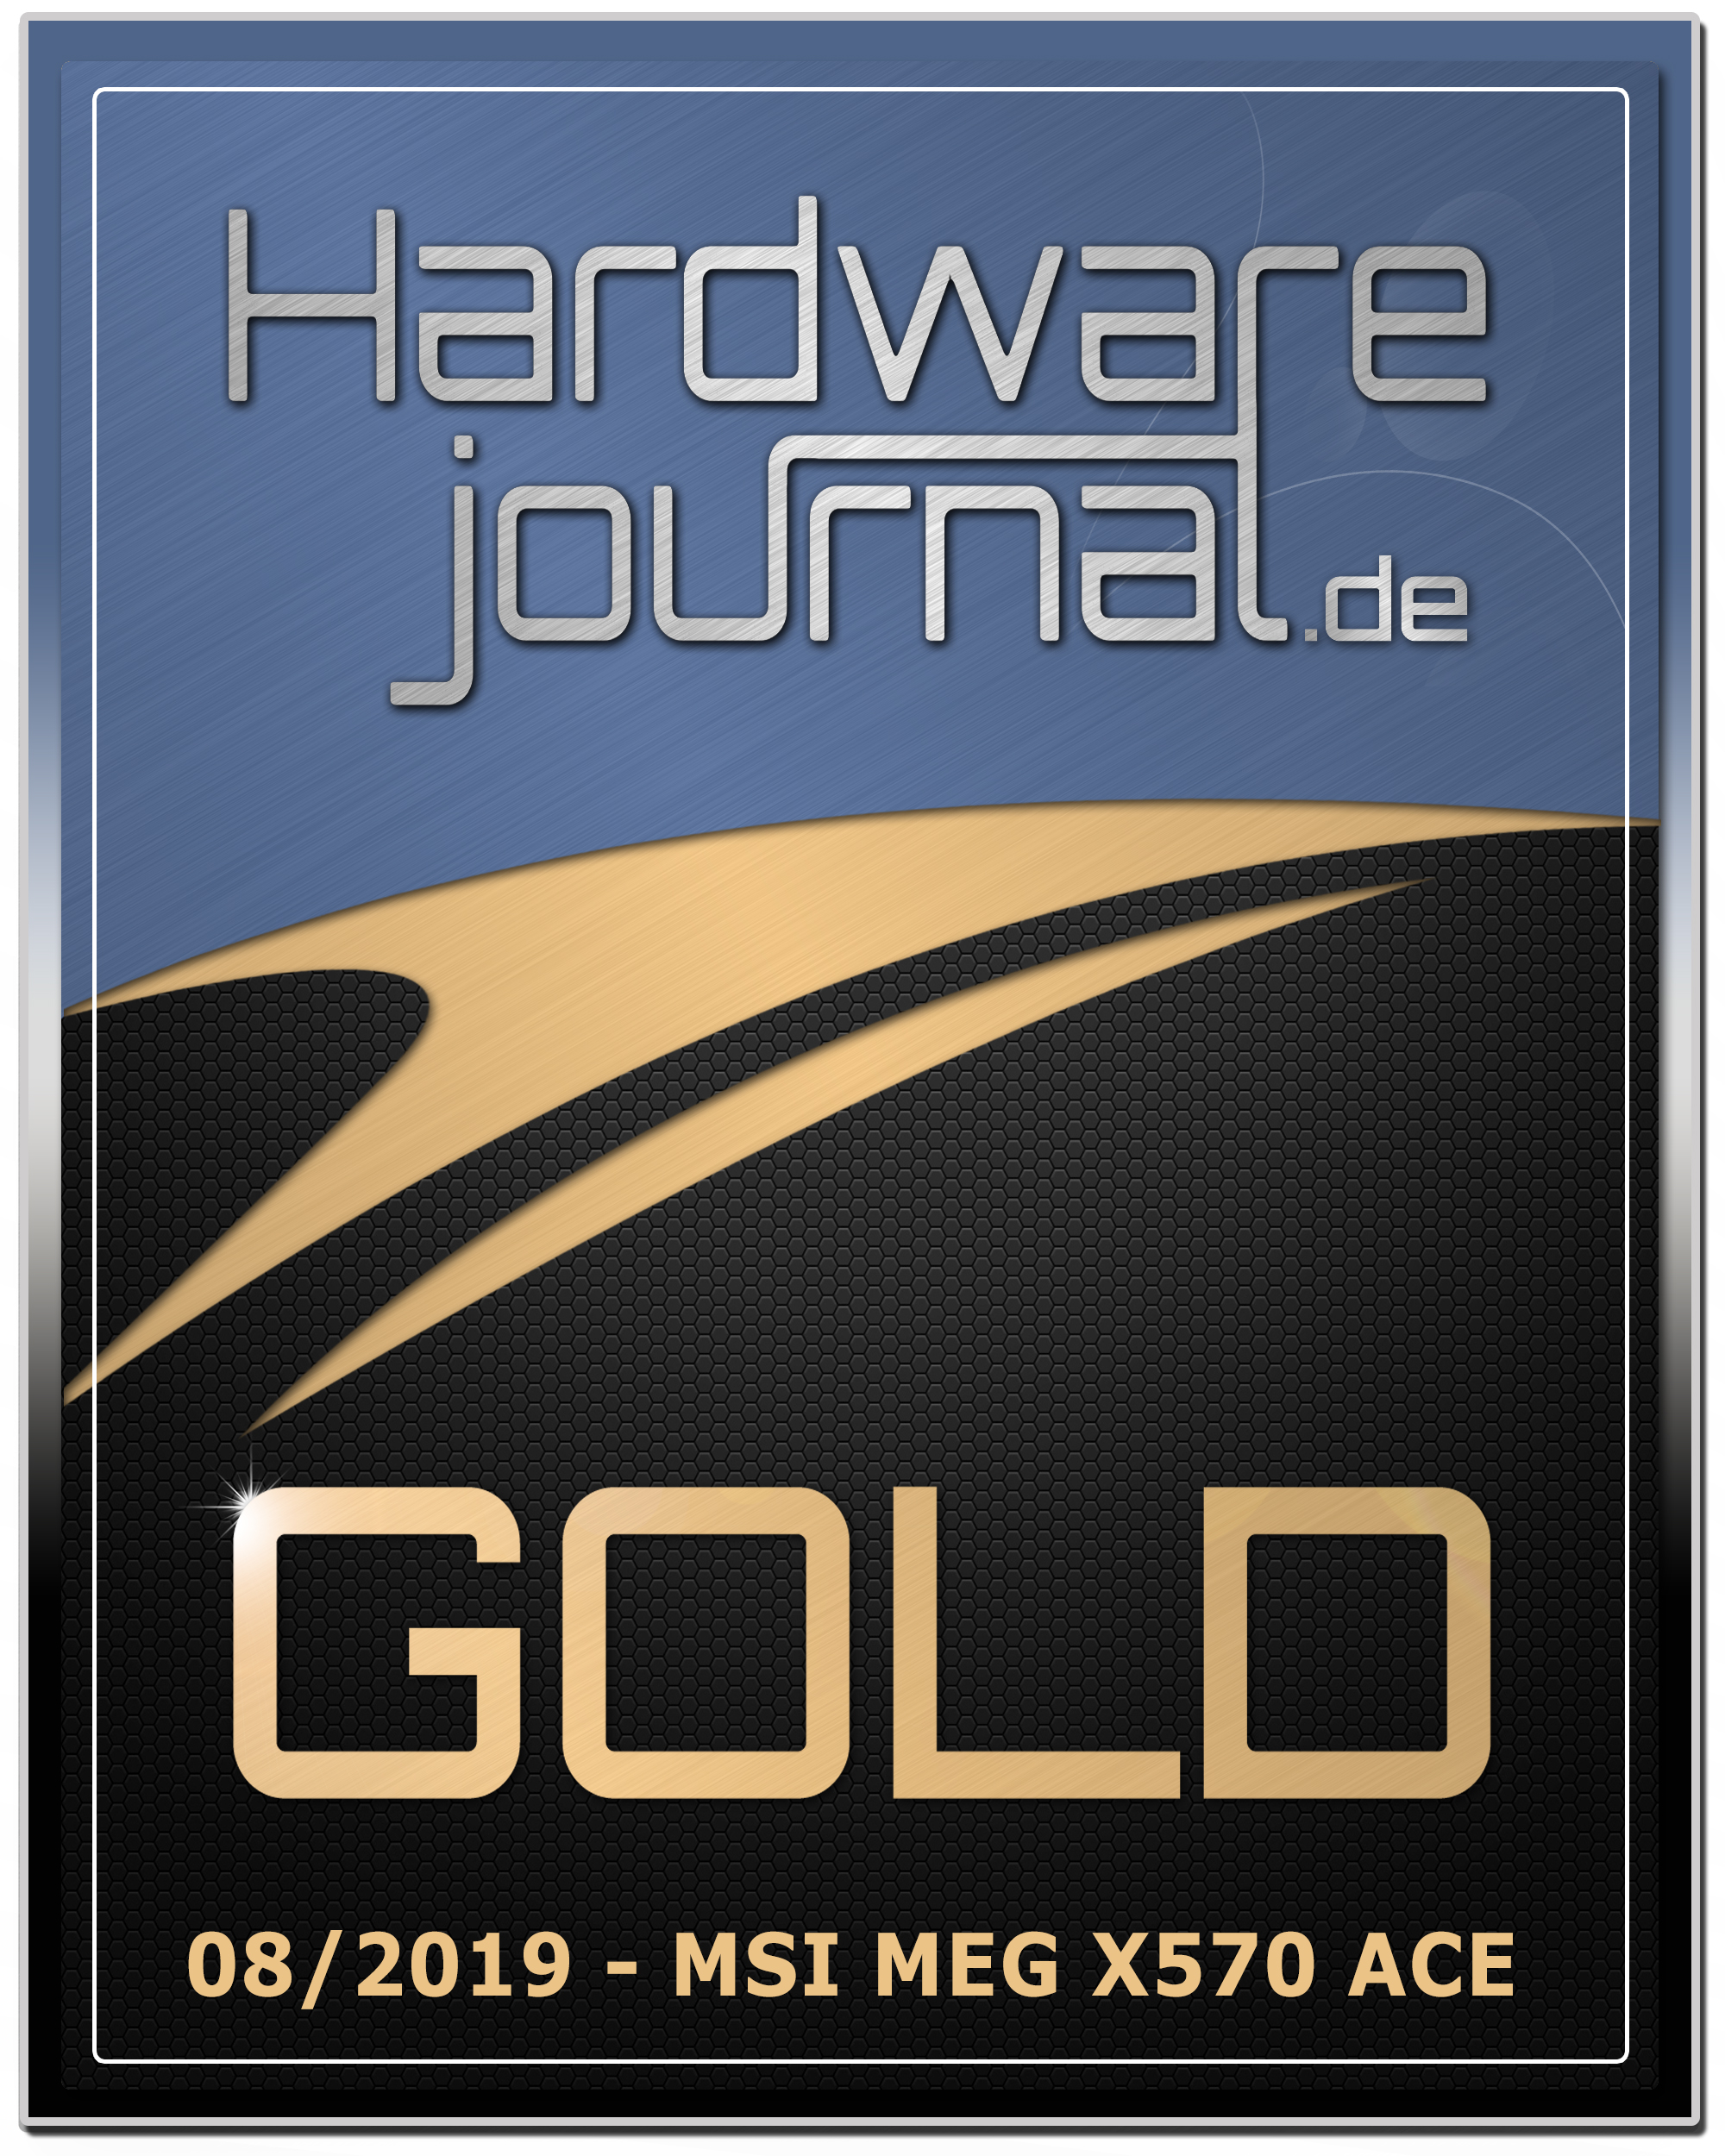 MSI MEG X570 ACE Gold Award Hardware Journal